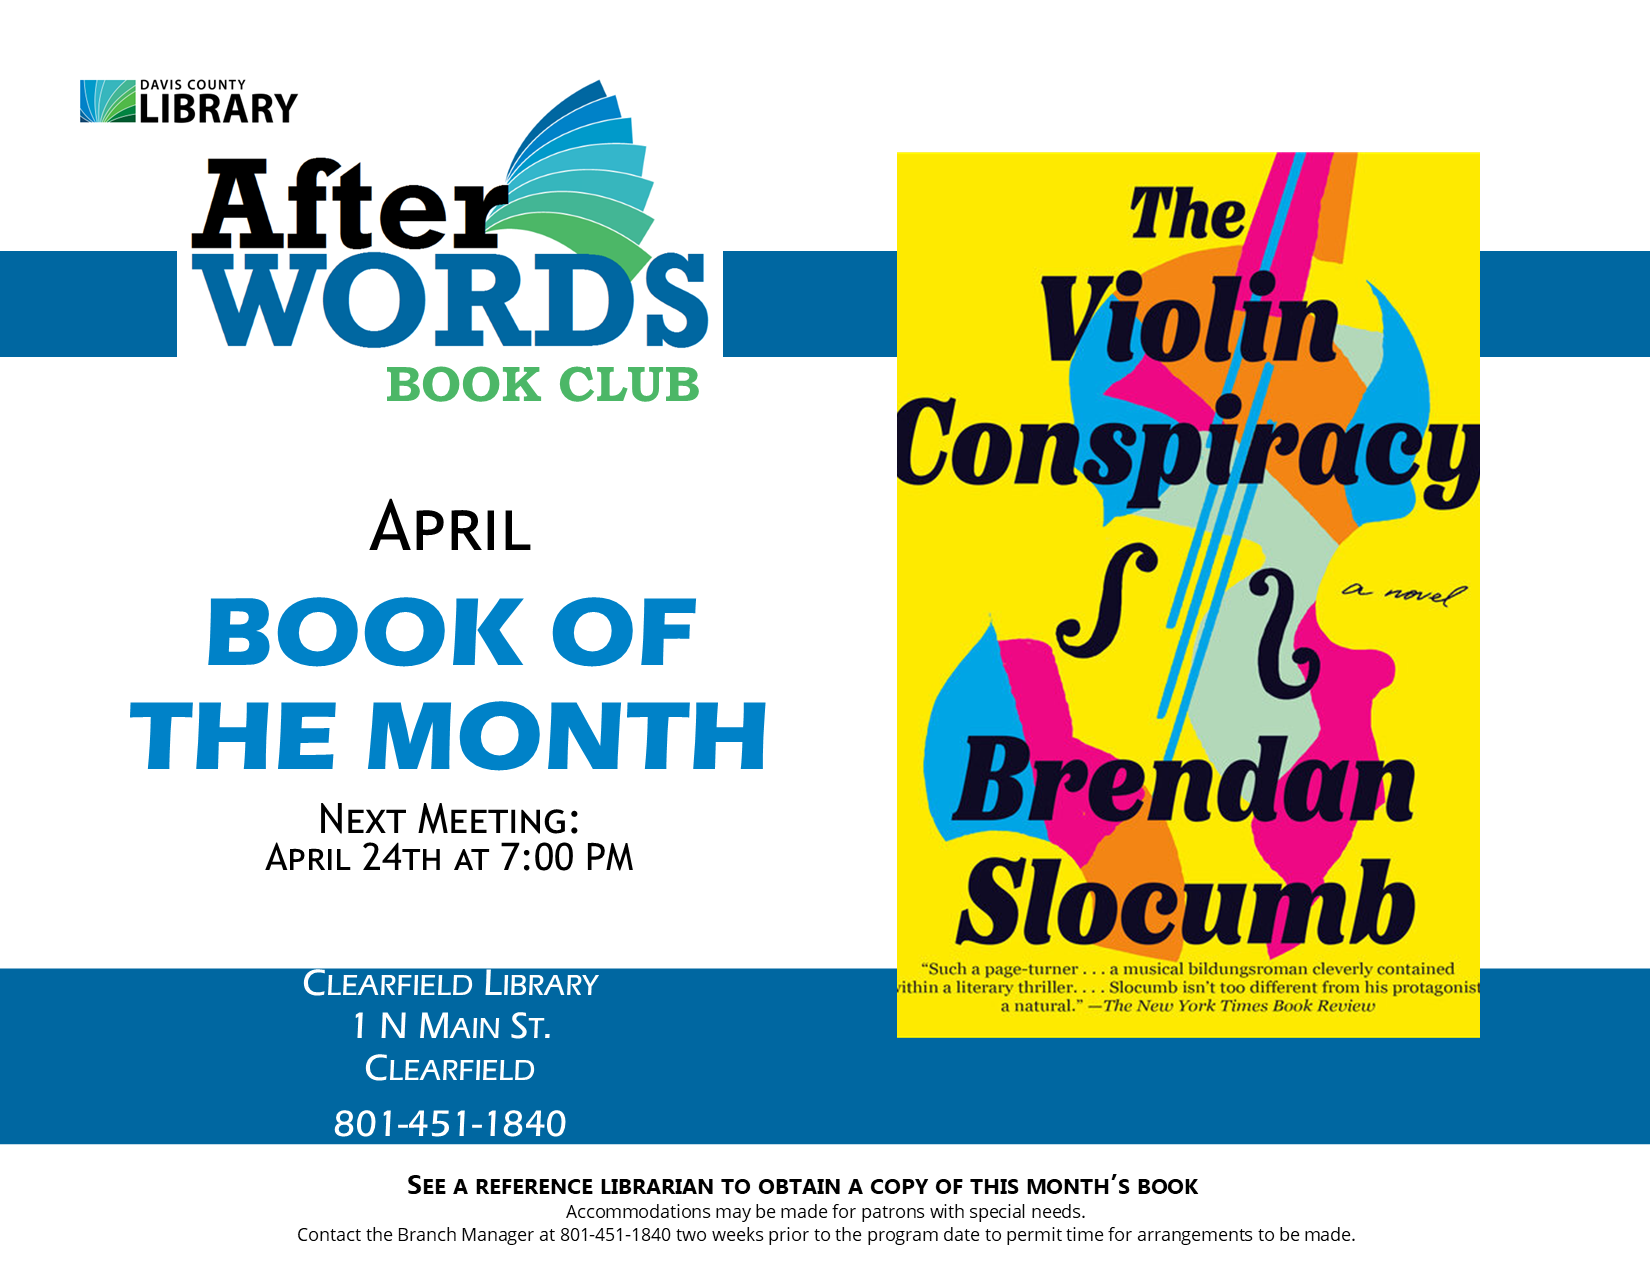 Book Club held April 24 at 7:00 pm. The Violin Conspiracy by Brendan Slocumb